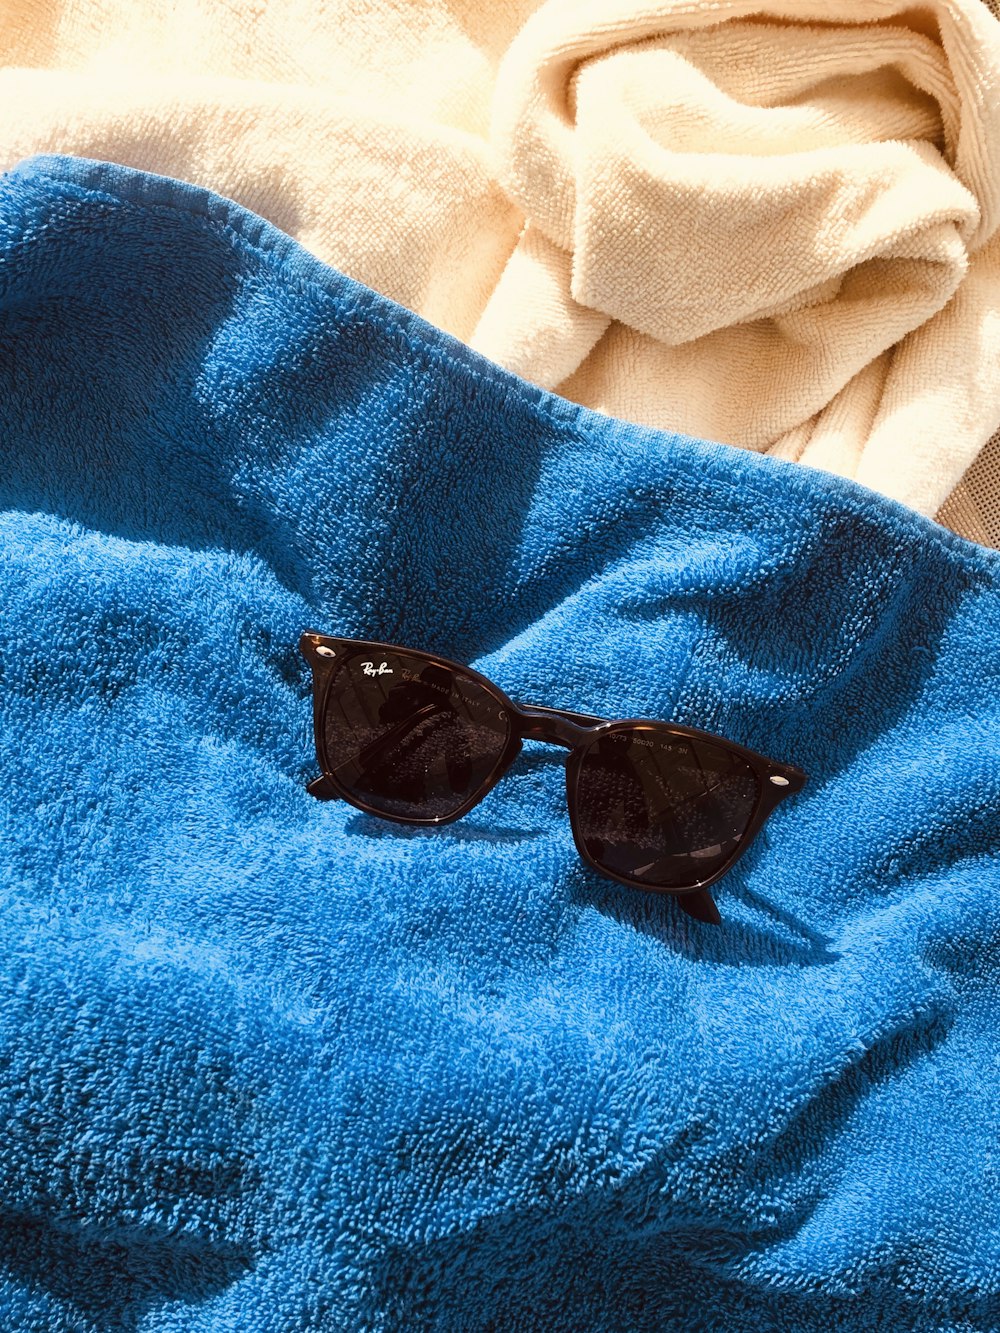 black framed sunglasses on blue textile